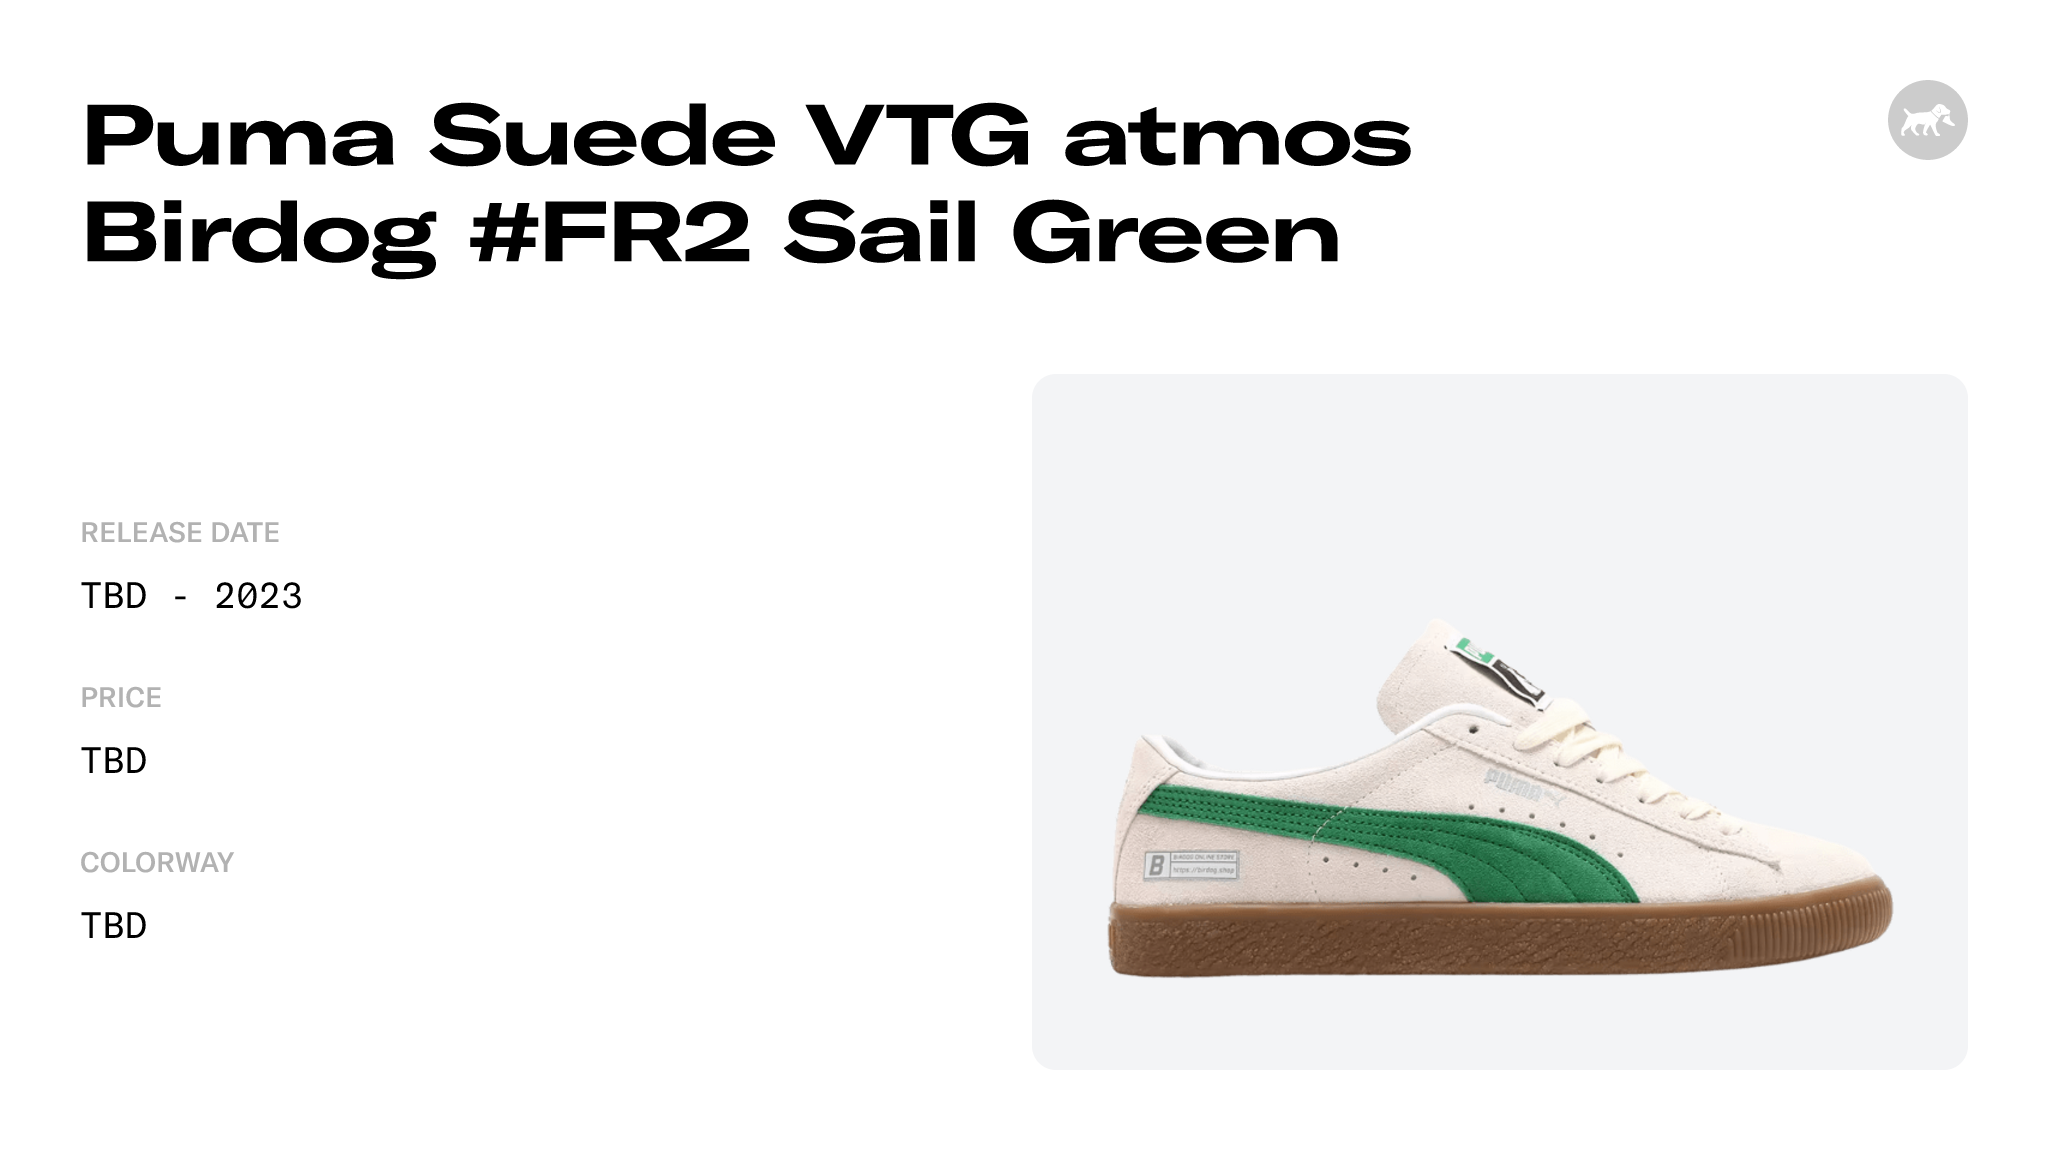 Puma Suede VTG atmos Birdog #FR2 Sail Green - 391916-01 Raffles